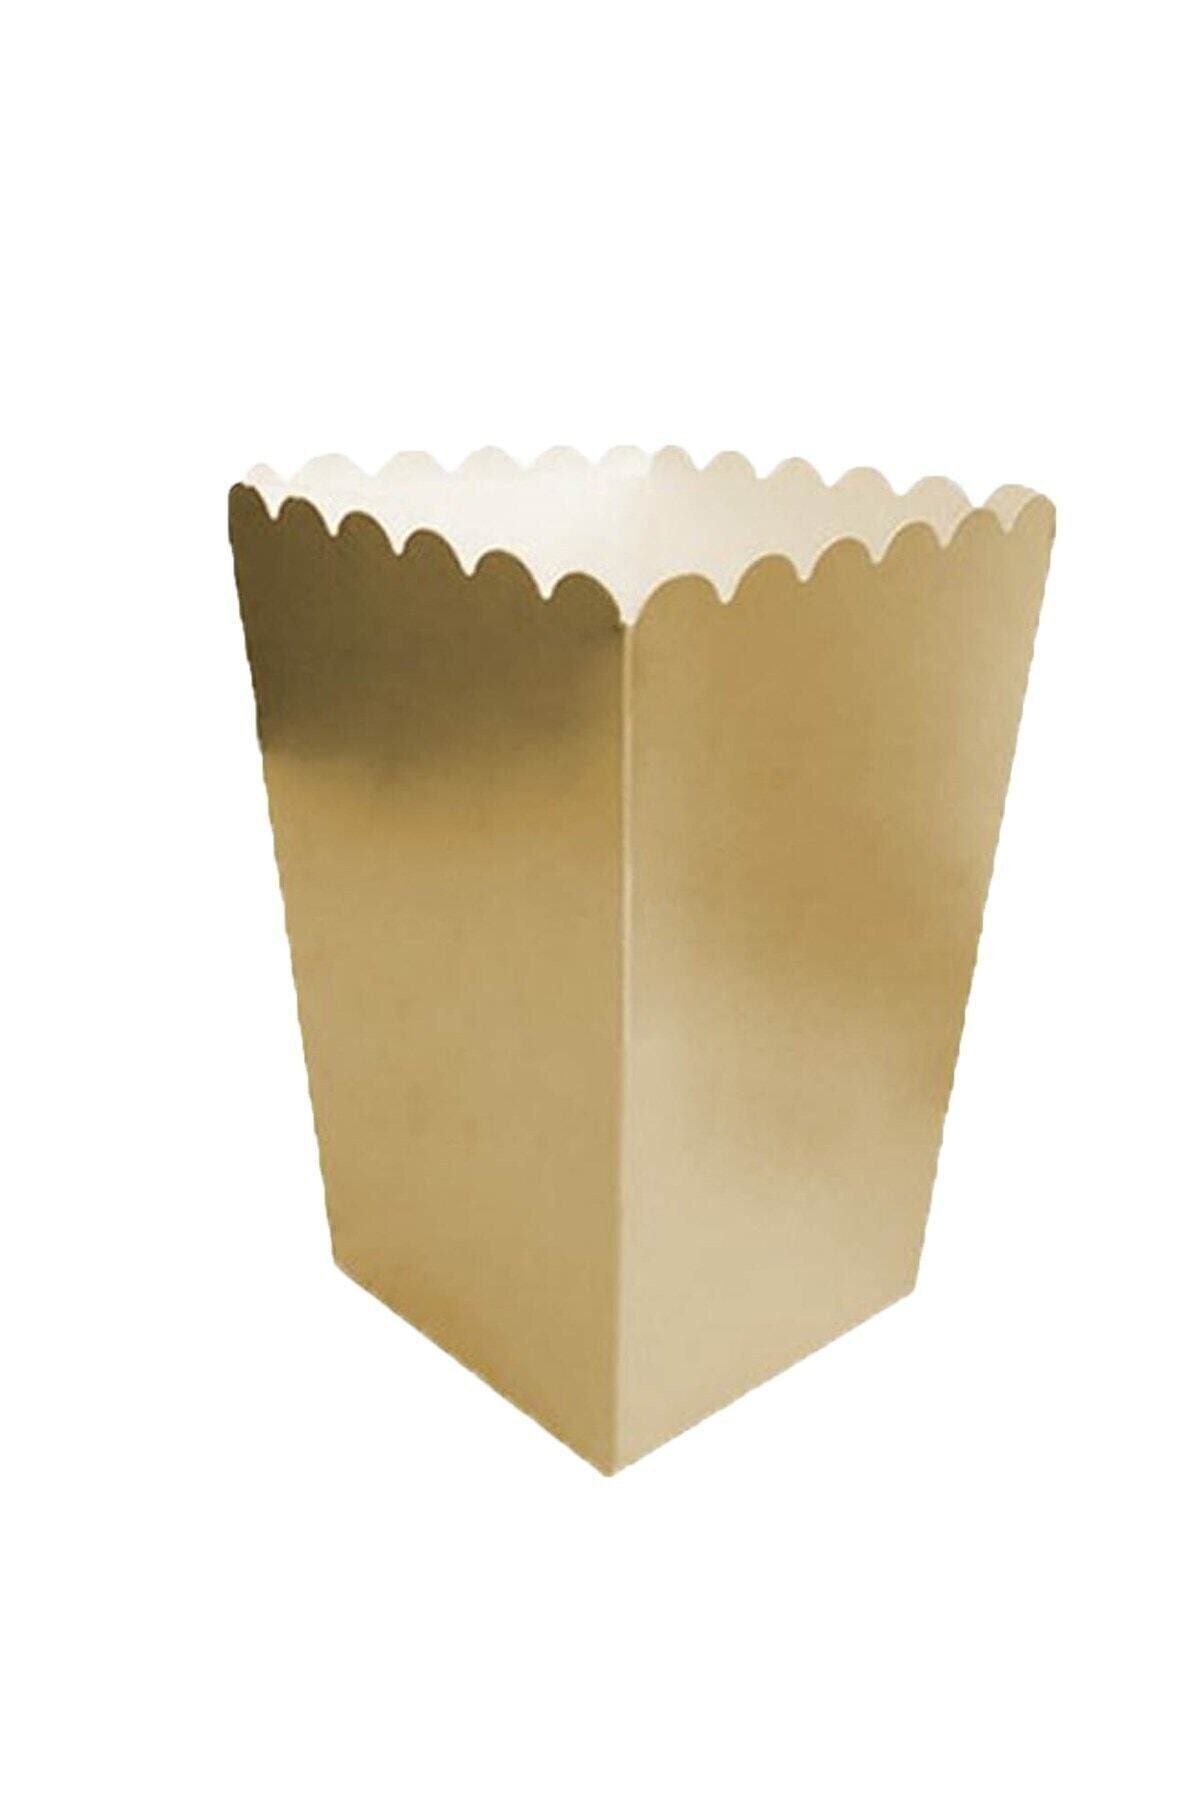 Aşkın Parti Evi Gold Popcorn Kutusu Karton Düz Renkli Cips Mısır Kutusu 10 Adet